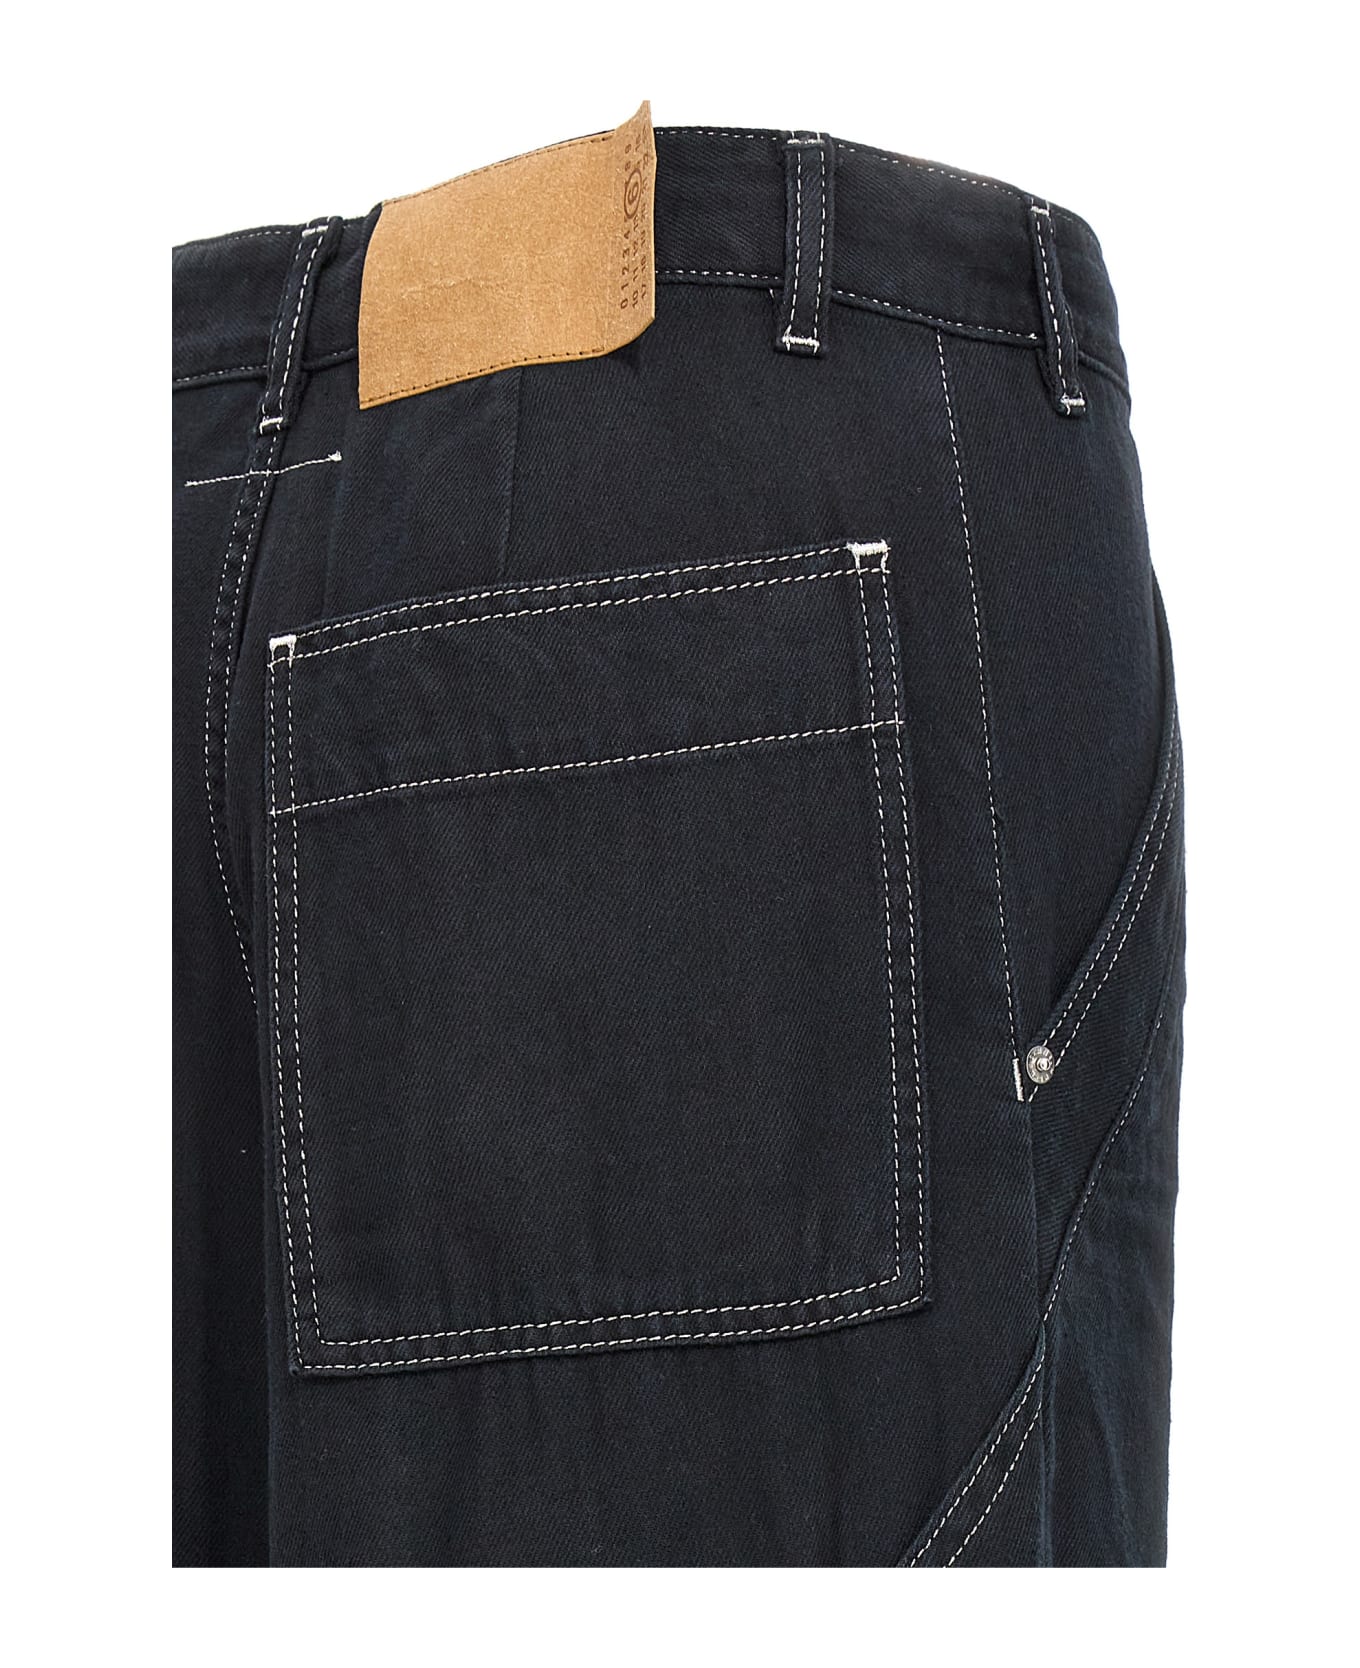 MM6 Maison Margiela Lurex Stitching Jeans - Black  